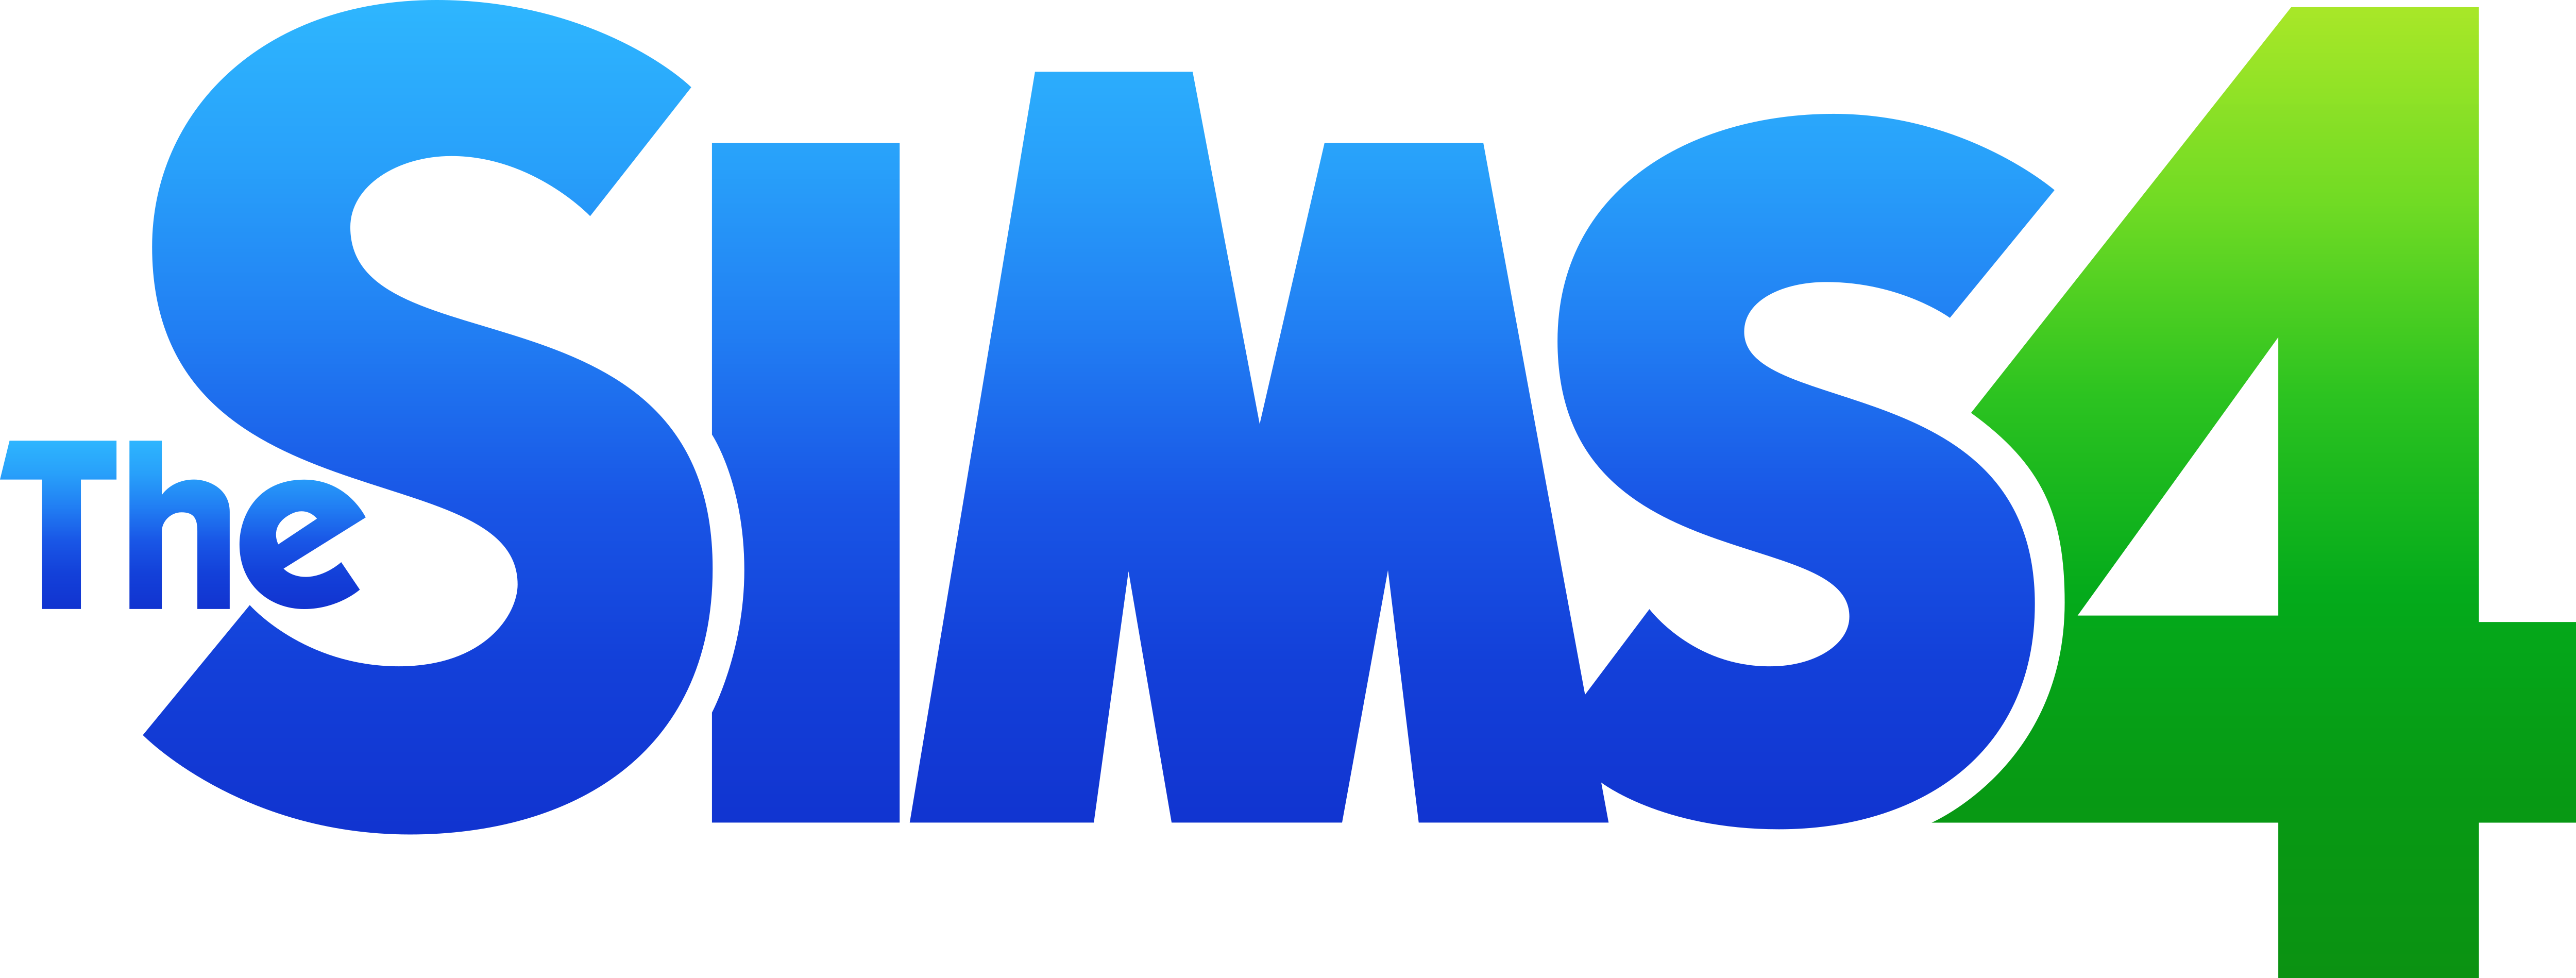 Les Sims 4 Logo Des Sims 4 Clipart Large Size Png Image Pikpng | Images ...